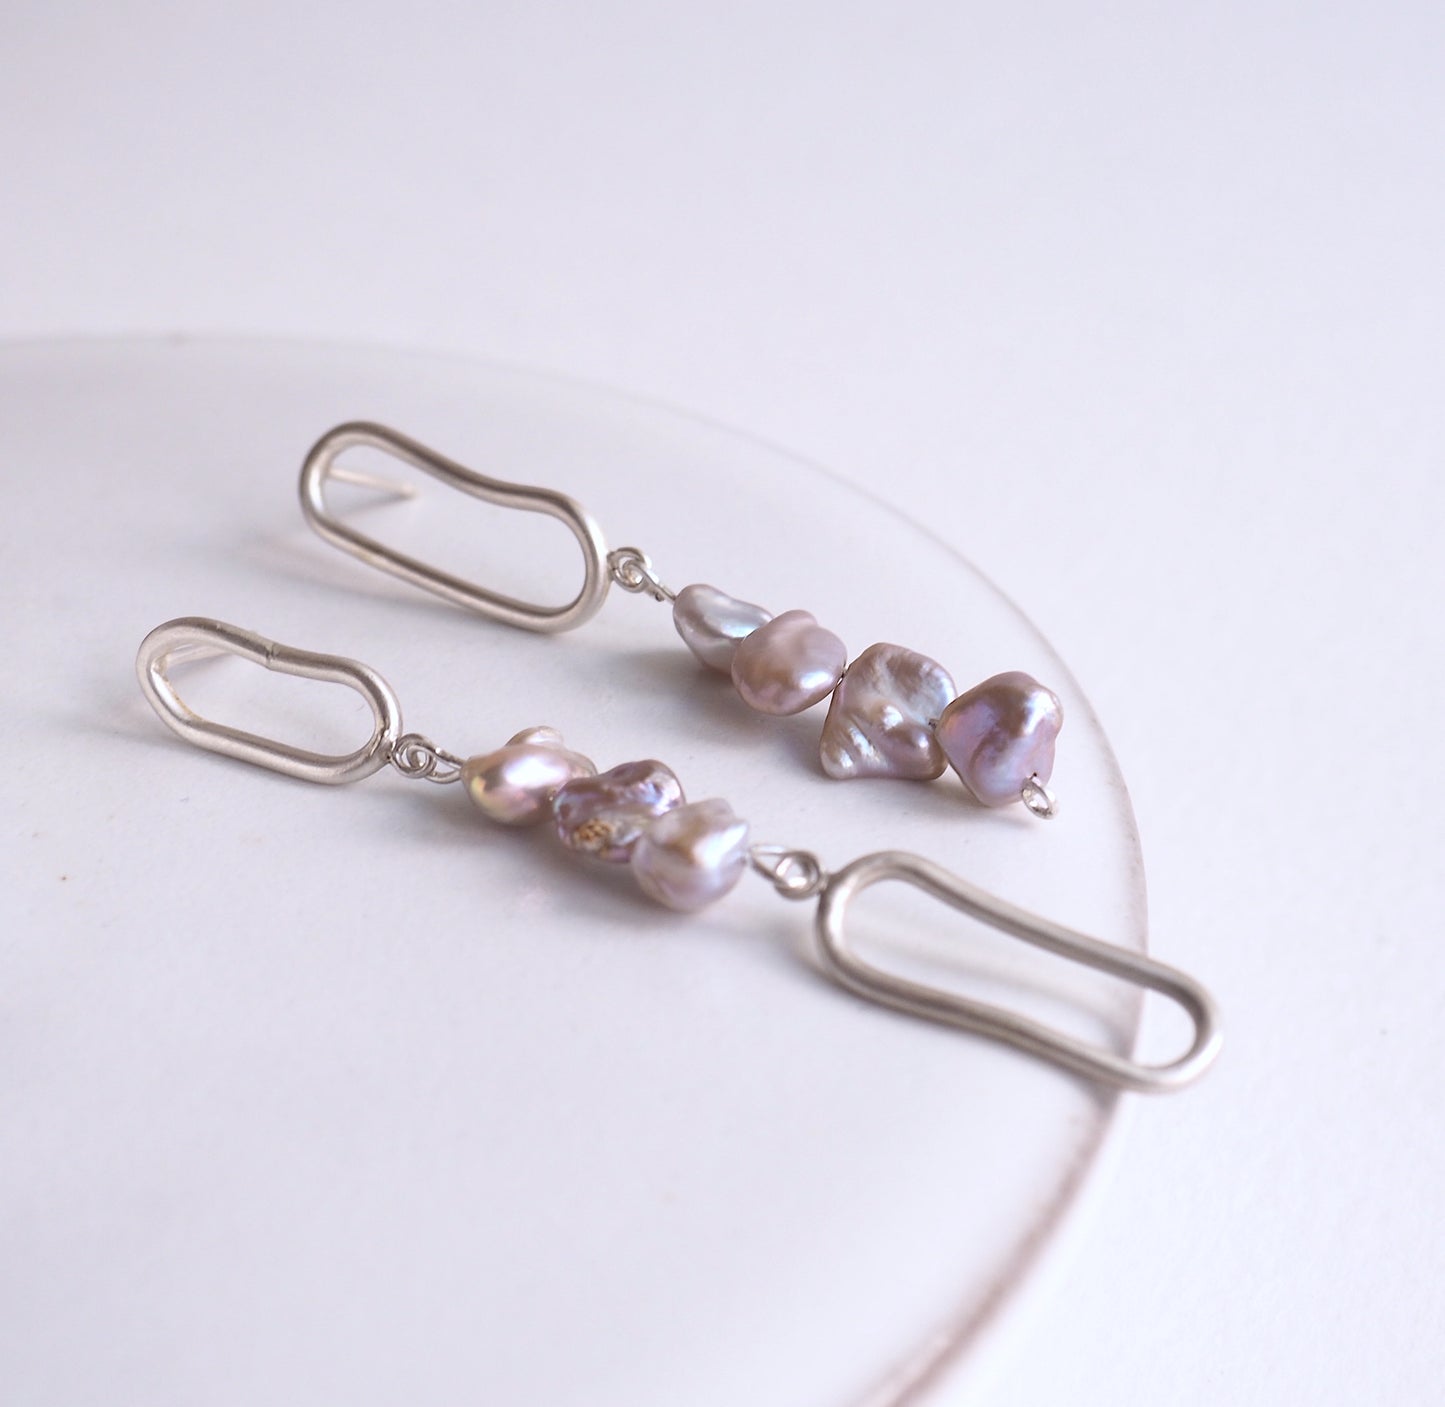 earrings pearl unique Silver Jewelry handcrafted handmade fashion bespoke custom design